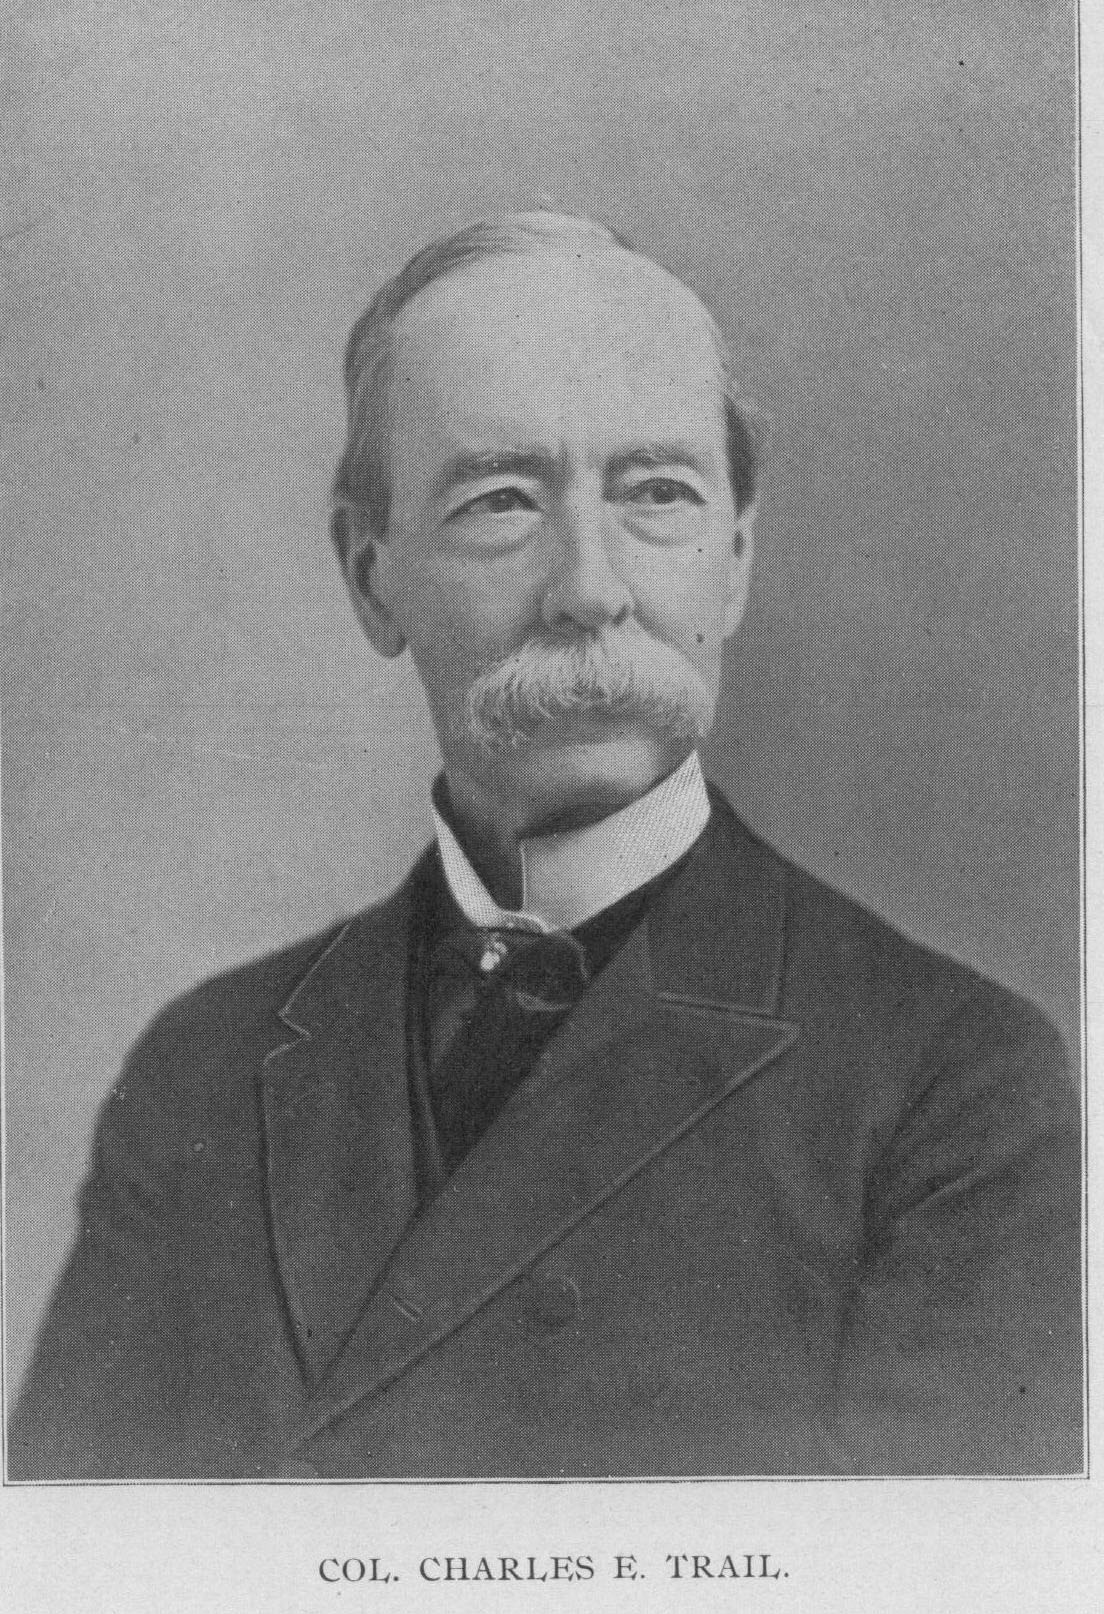 Charles E. Trail